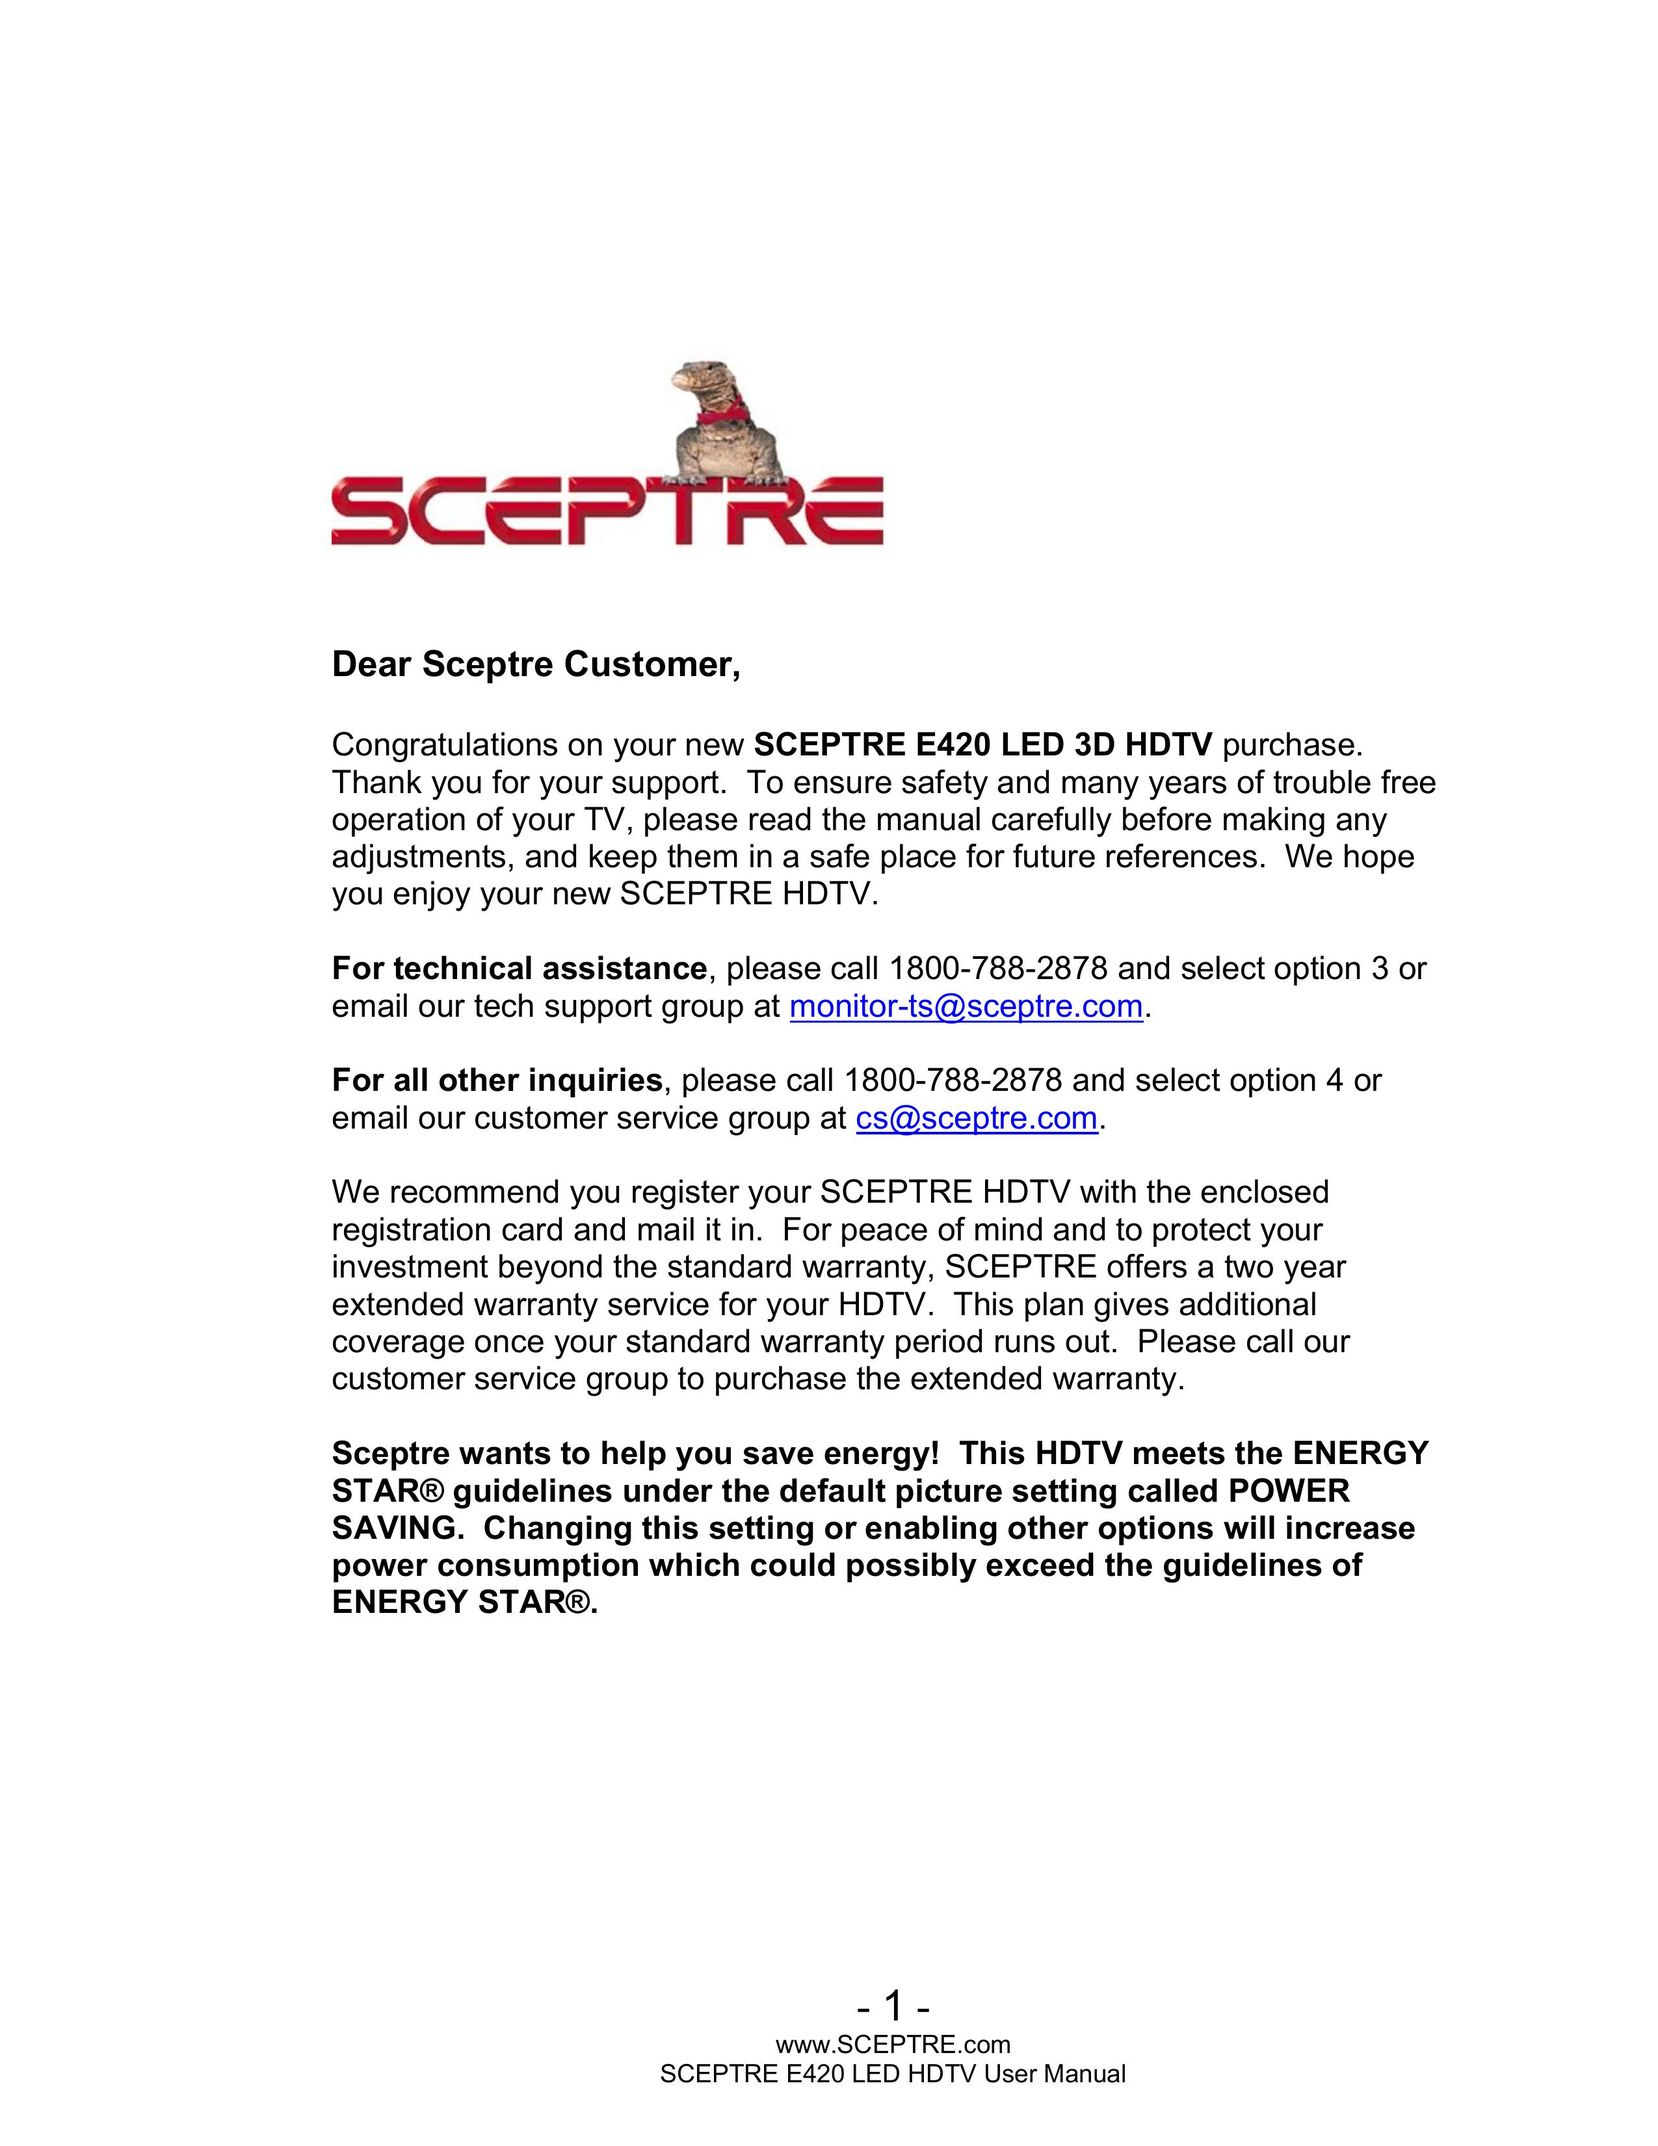 Sceptre Technologies SCEPTRE E420 LED 3D HDTV Flat Panel Television User Manual